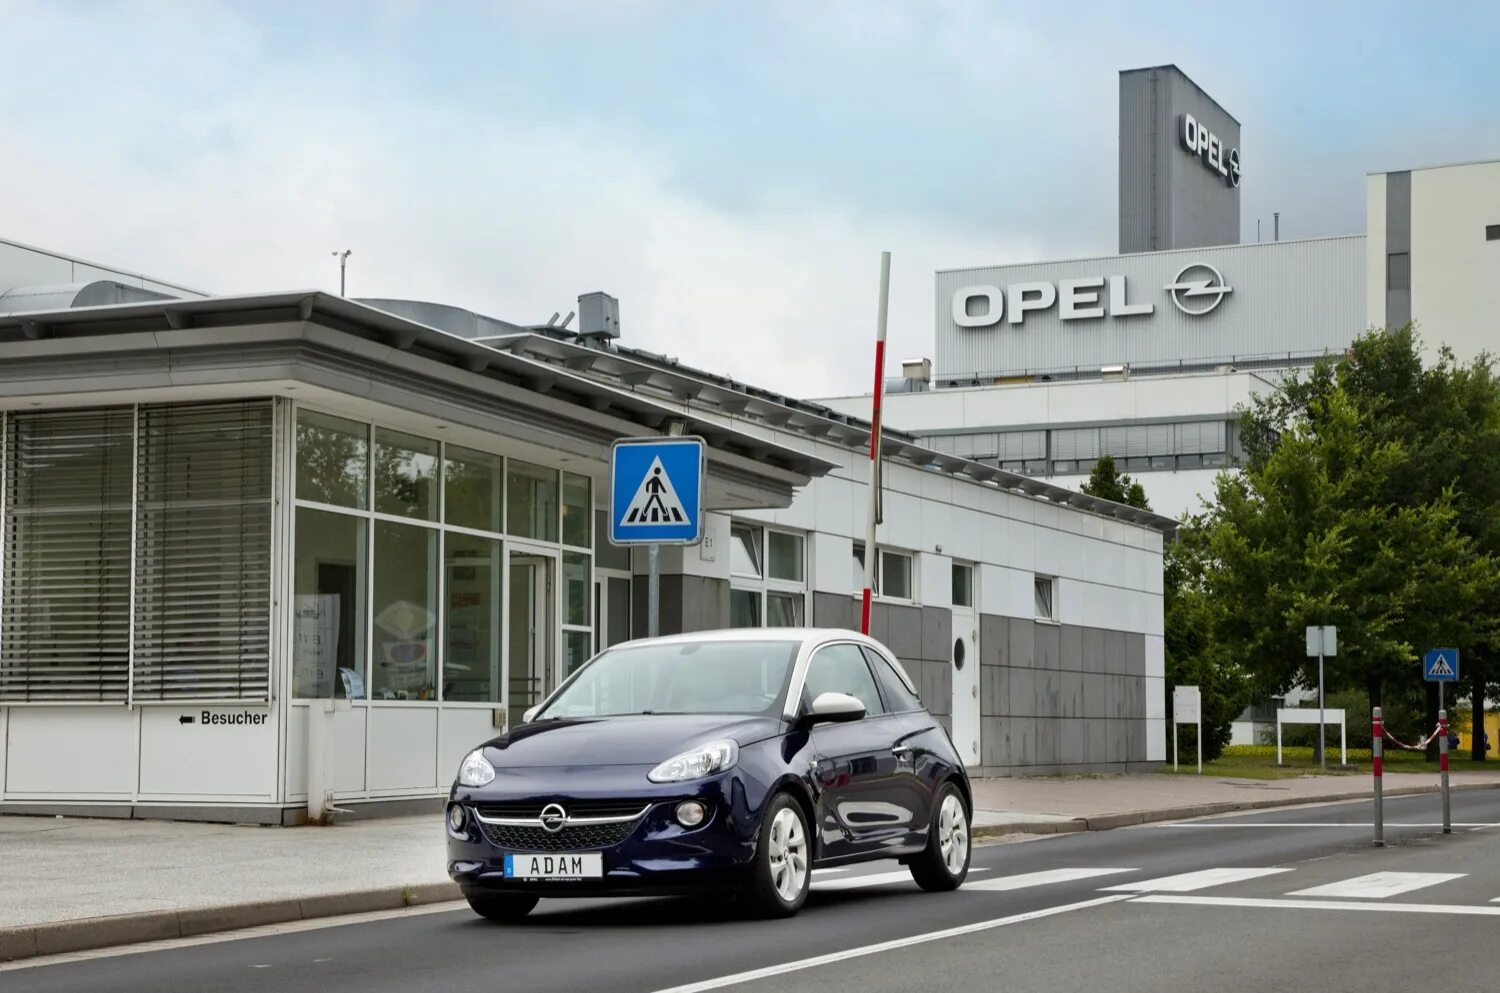 Opel германия. Завод Opel Айзенах. Опель GM. Opel завод в Германии. Завод Опель в Гессене.